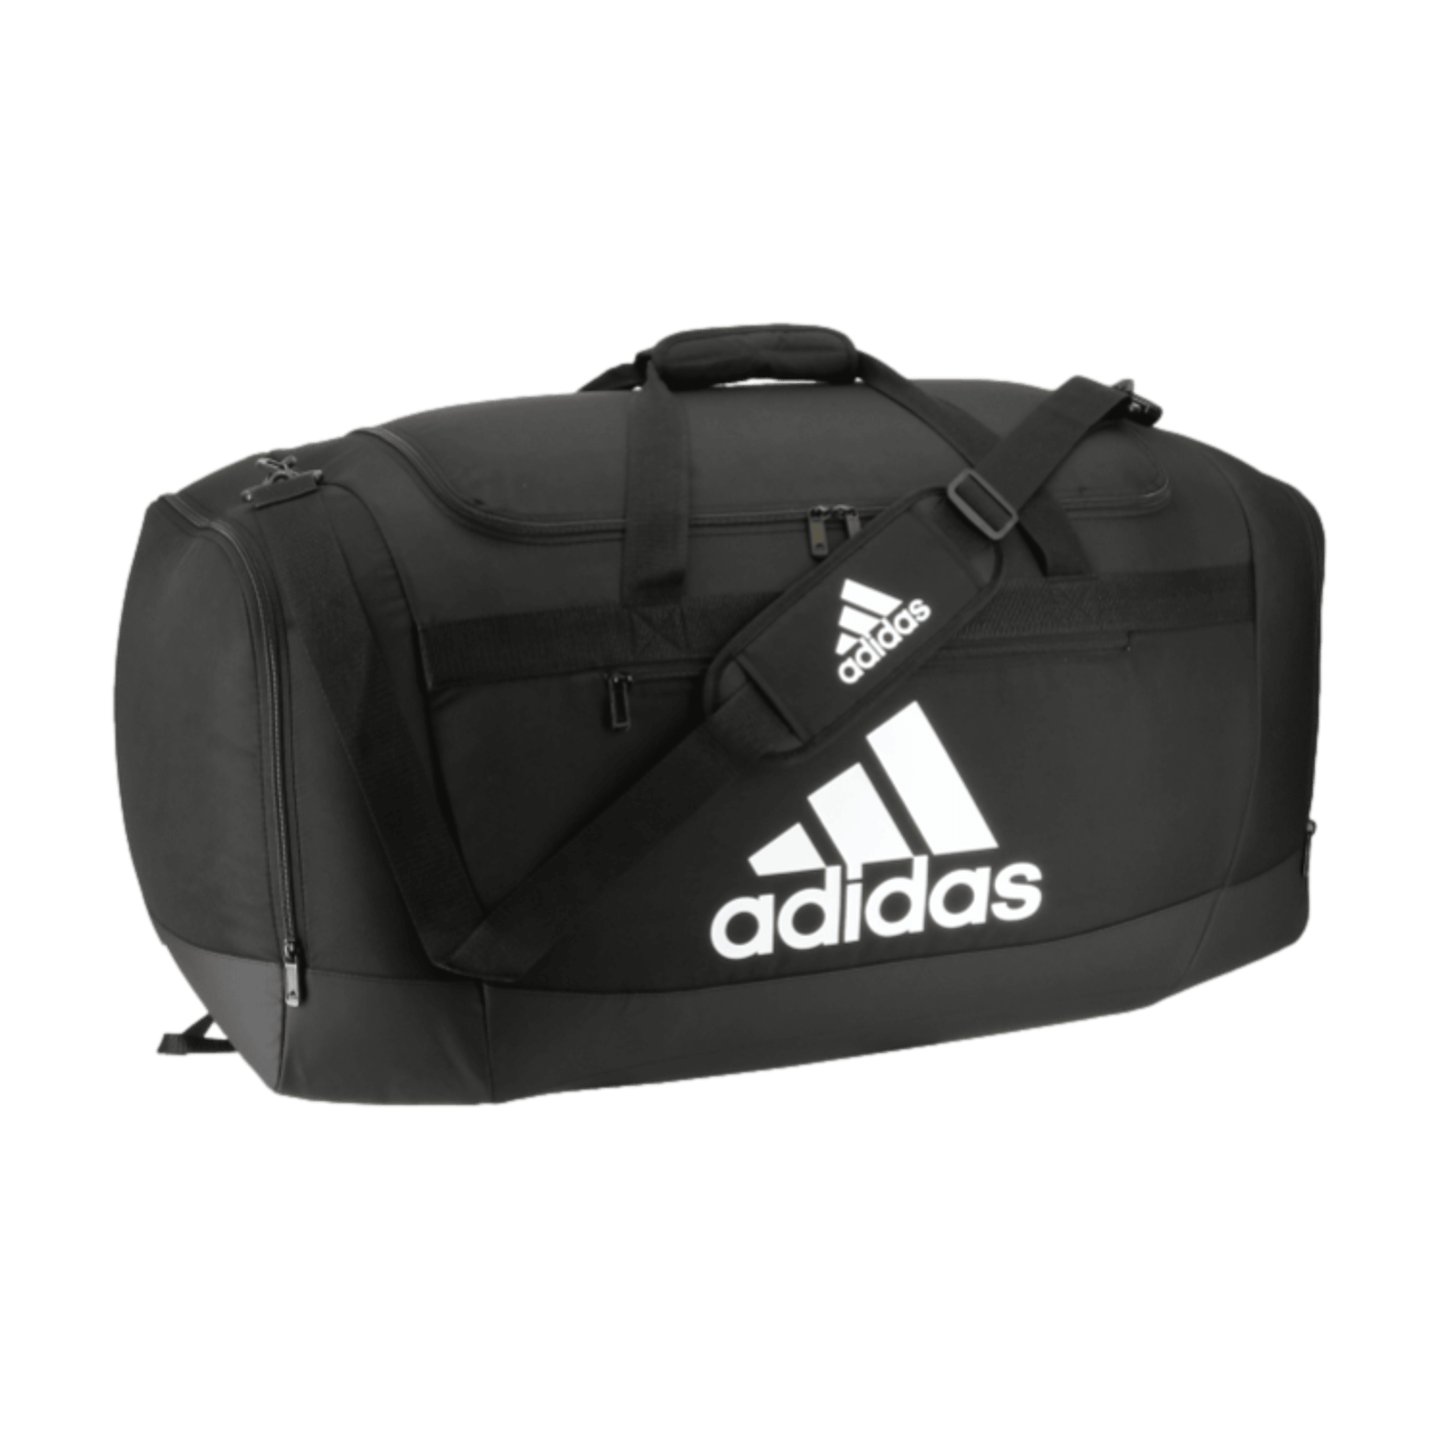 Adidas Defender IV Large Duffel Bag